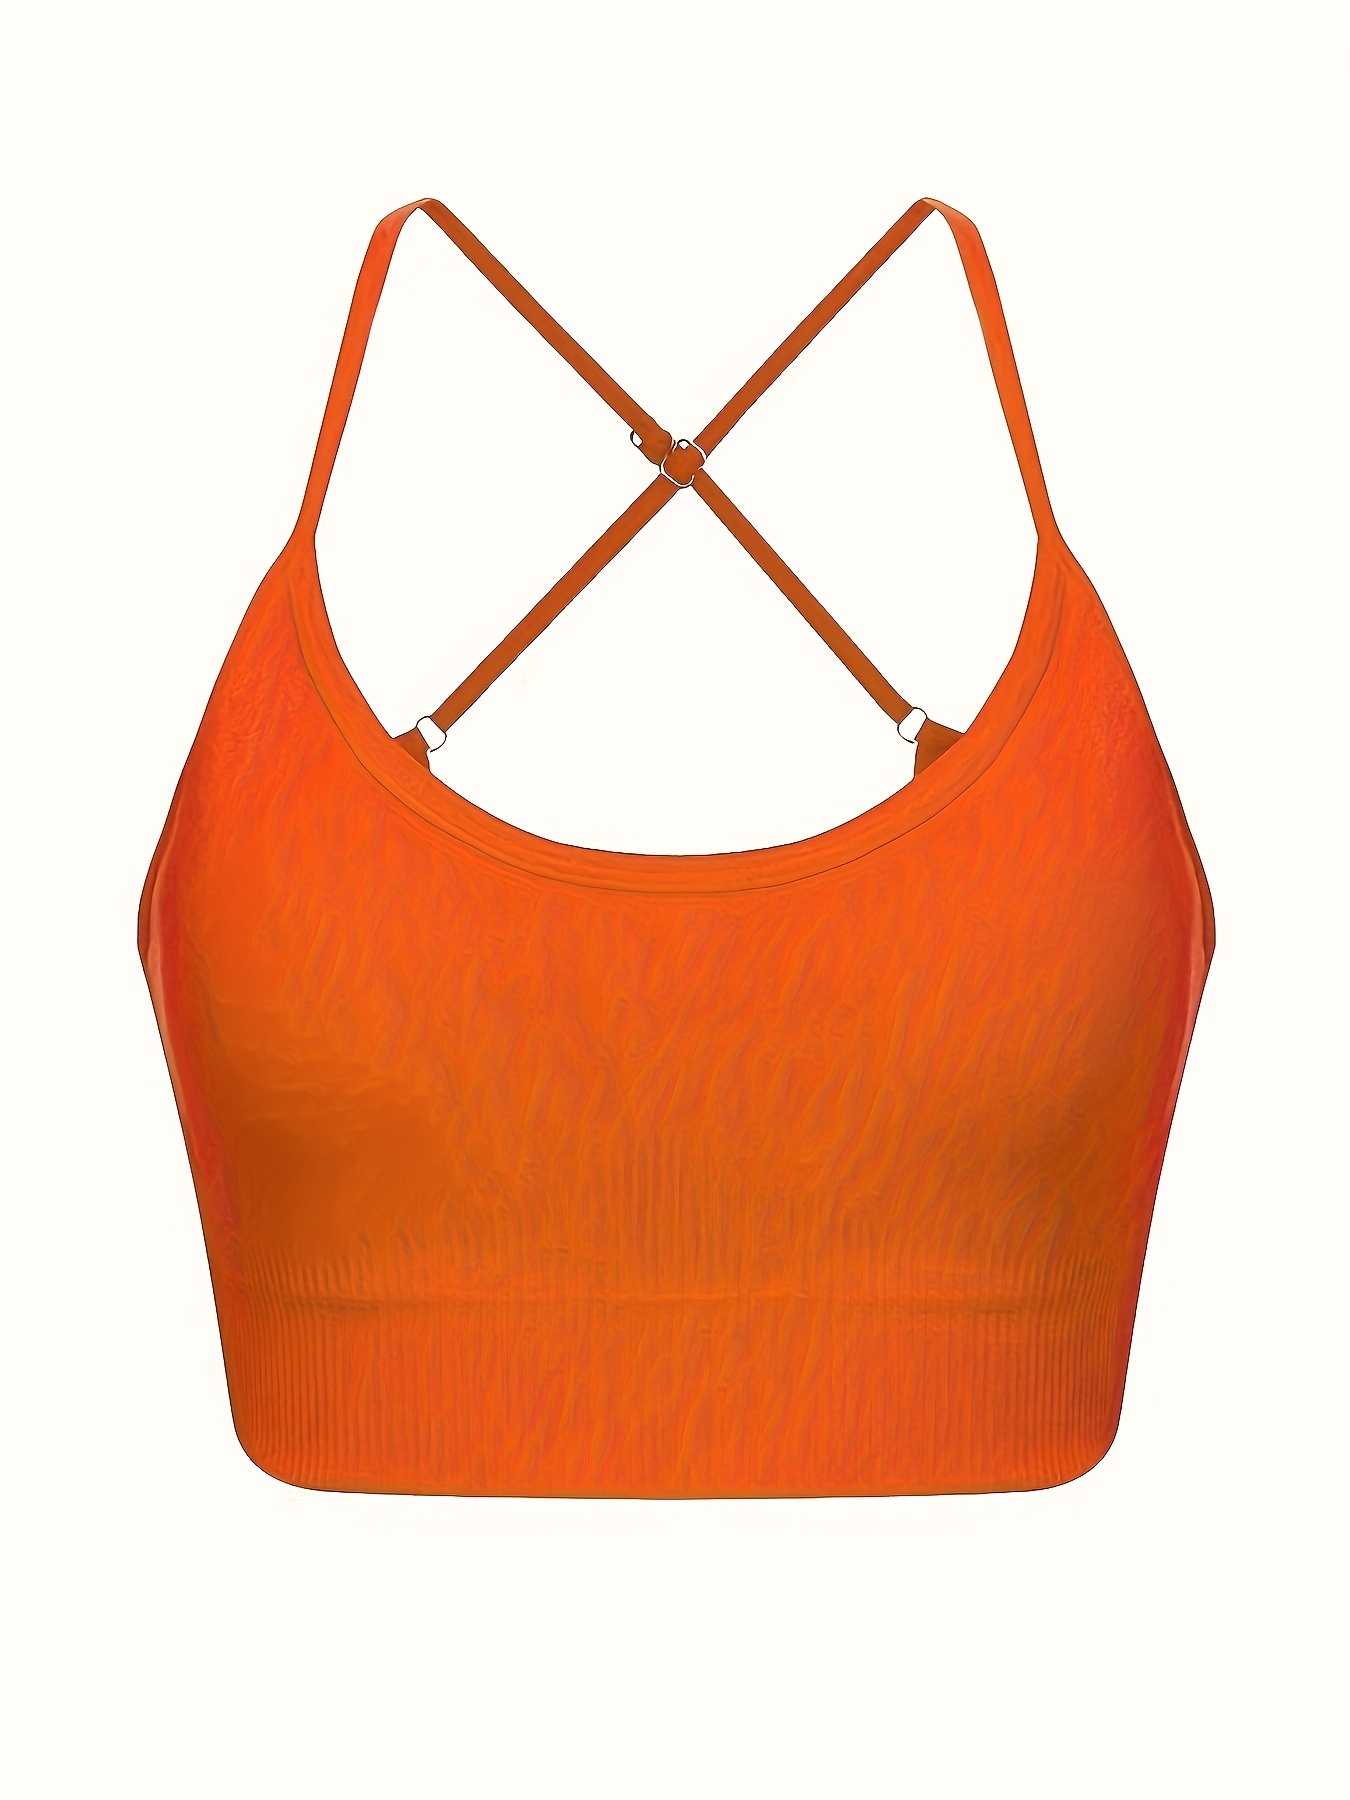 Fashion Sports Bras Top Women V-Neck Anti-sweat Padded Yoga Workout Athletic  Bras Crop Top Peachy Orange